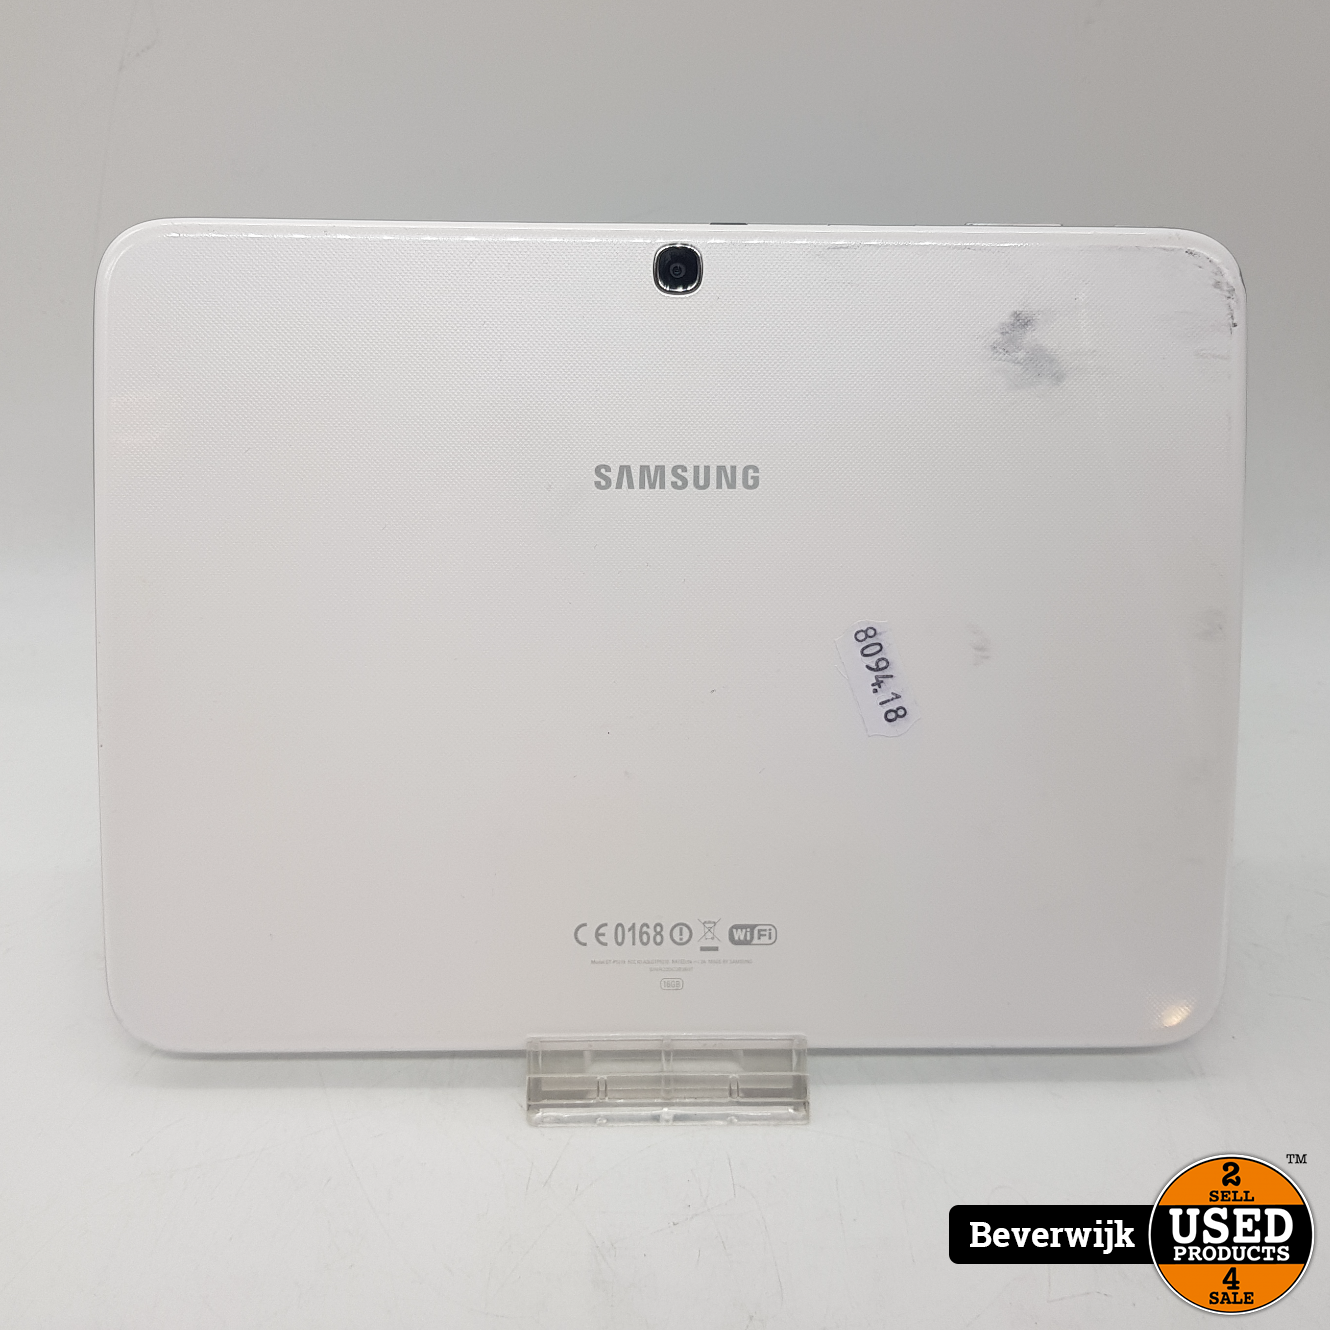 Samsung Galaxy Tab 3 10.1 16GB In Redelijke Staat! - Used Products Beverwijk